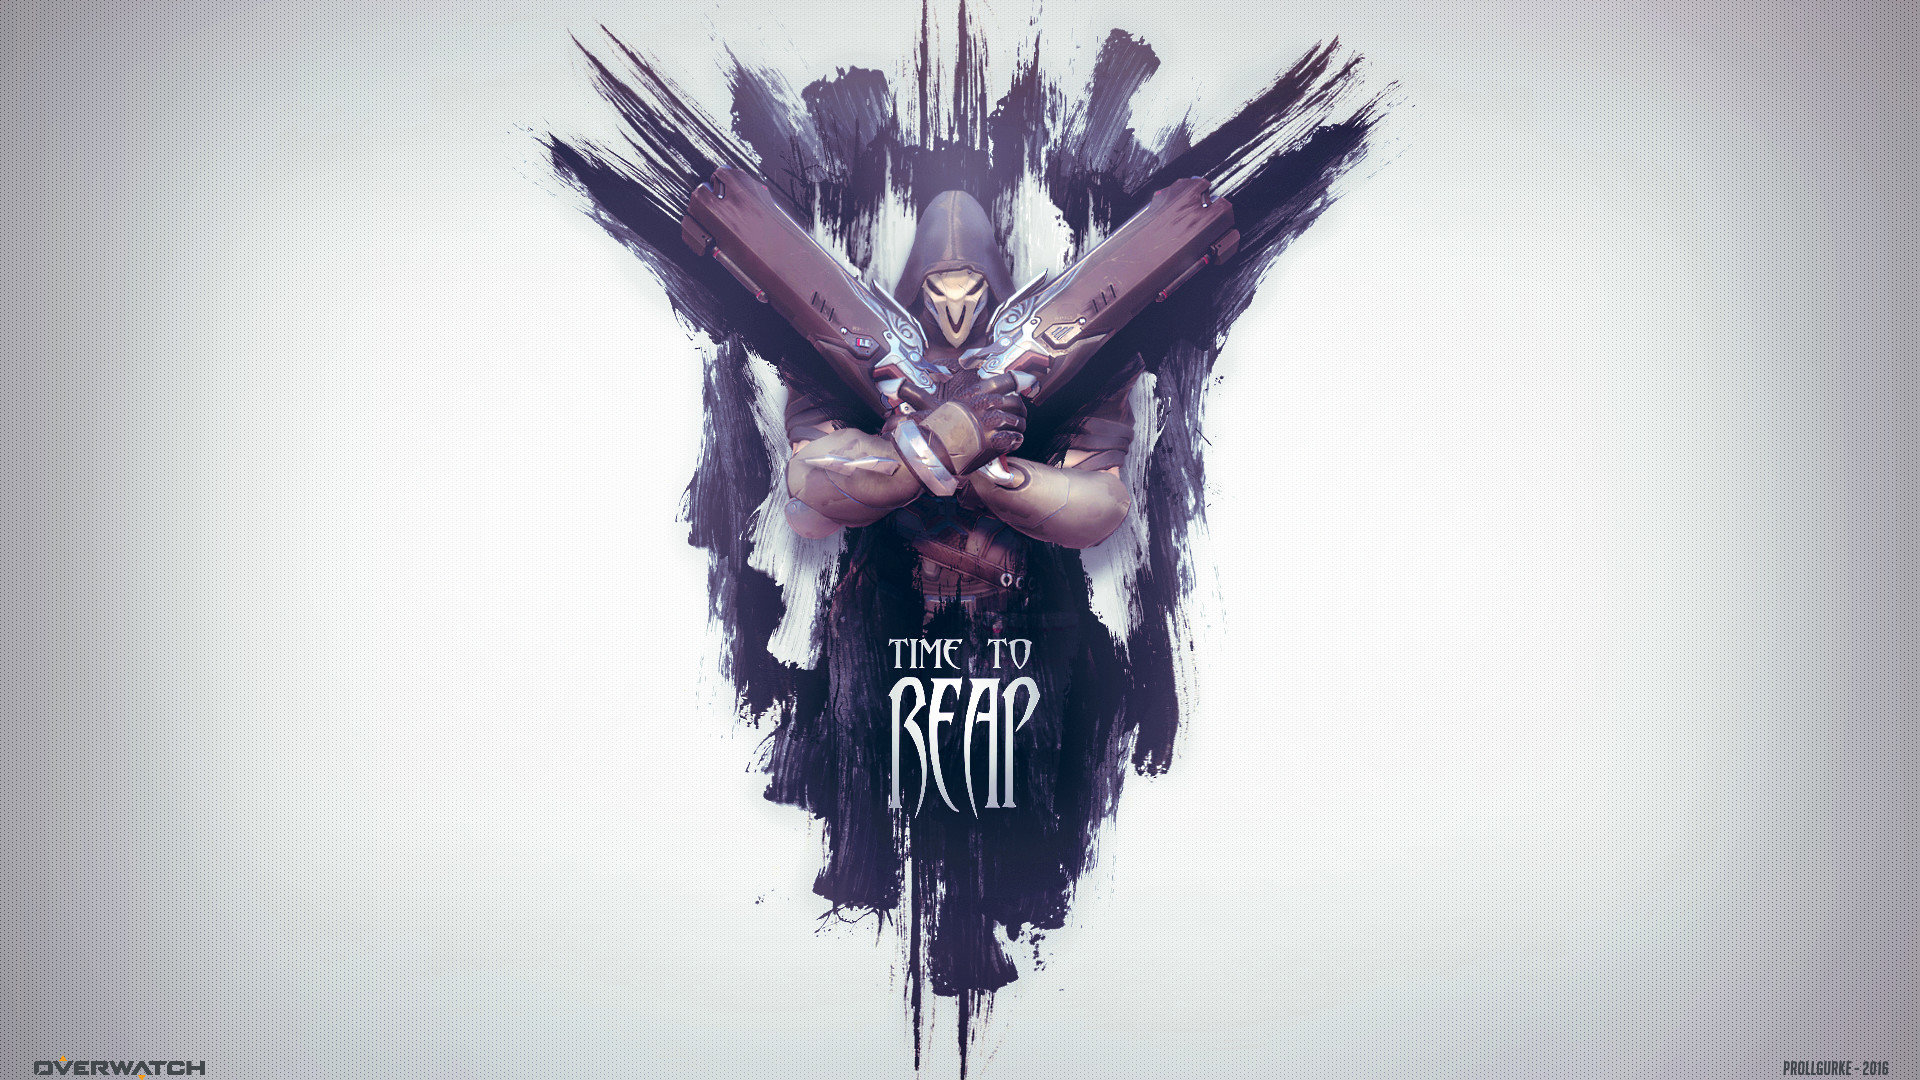 High resolution Reaper (Overwatch) full hd 1080p wallpaper ID:169711 for desktop